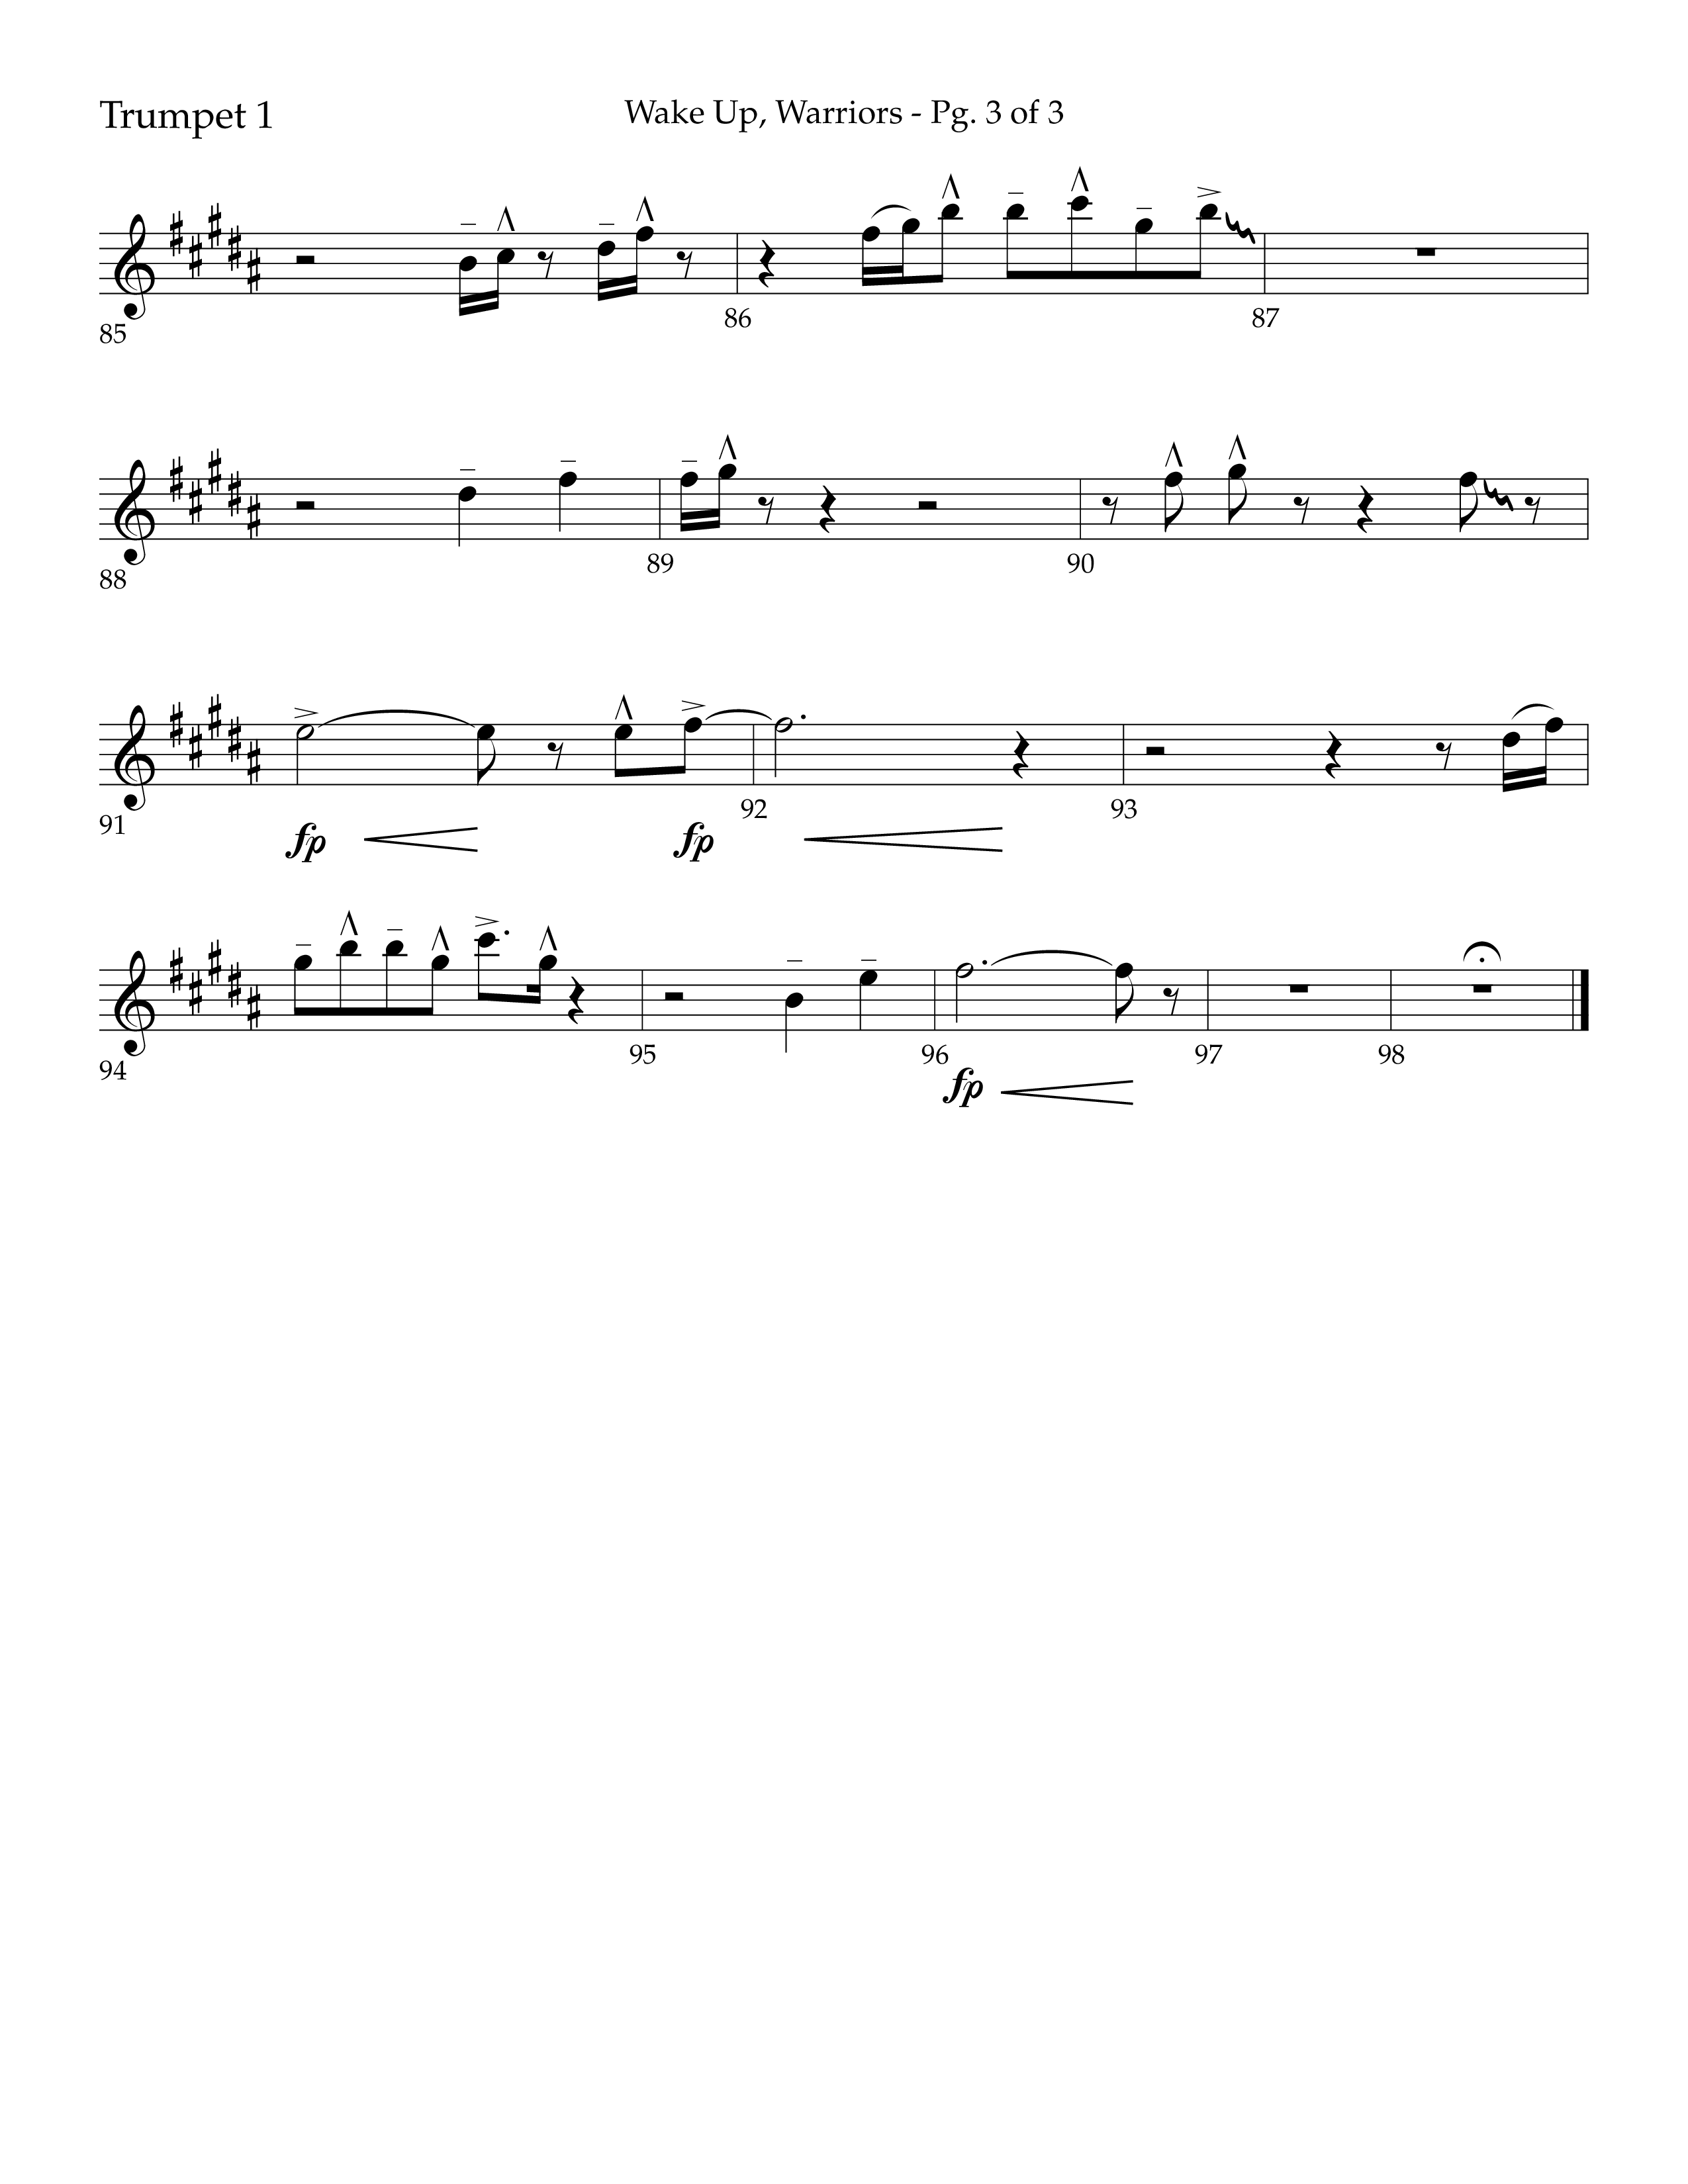 Wake Up Warriors (Choral Anthem SATB) Trumpet 1 (Lifeway Choral / Arr. John Bolin / Orch. Tim Cates)